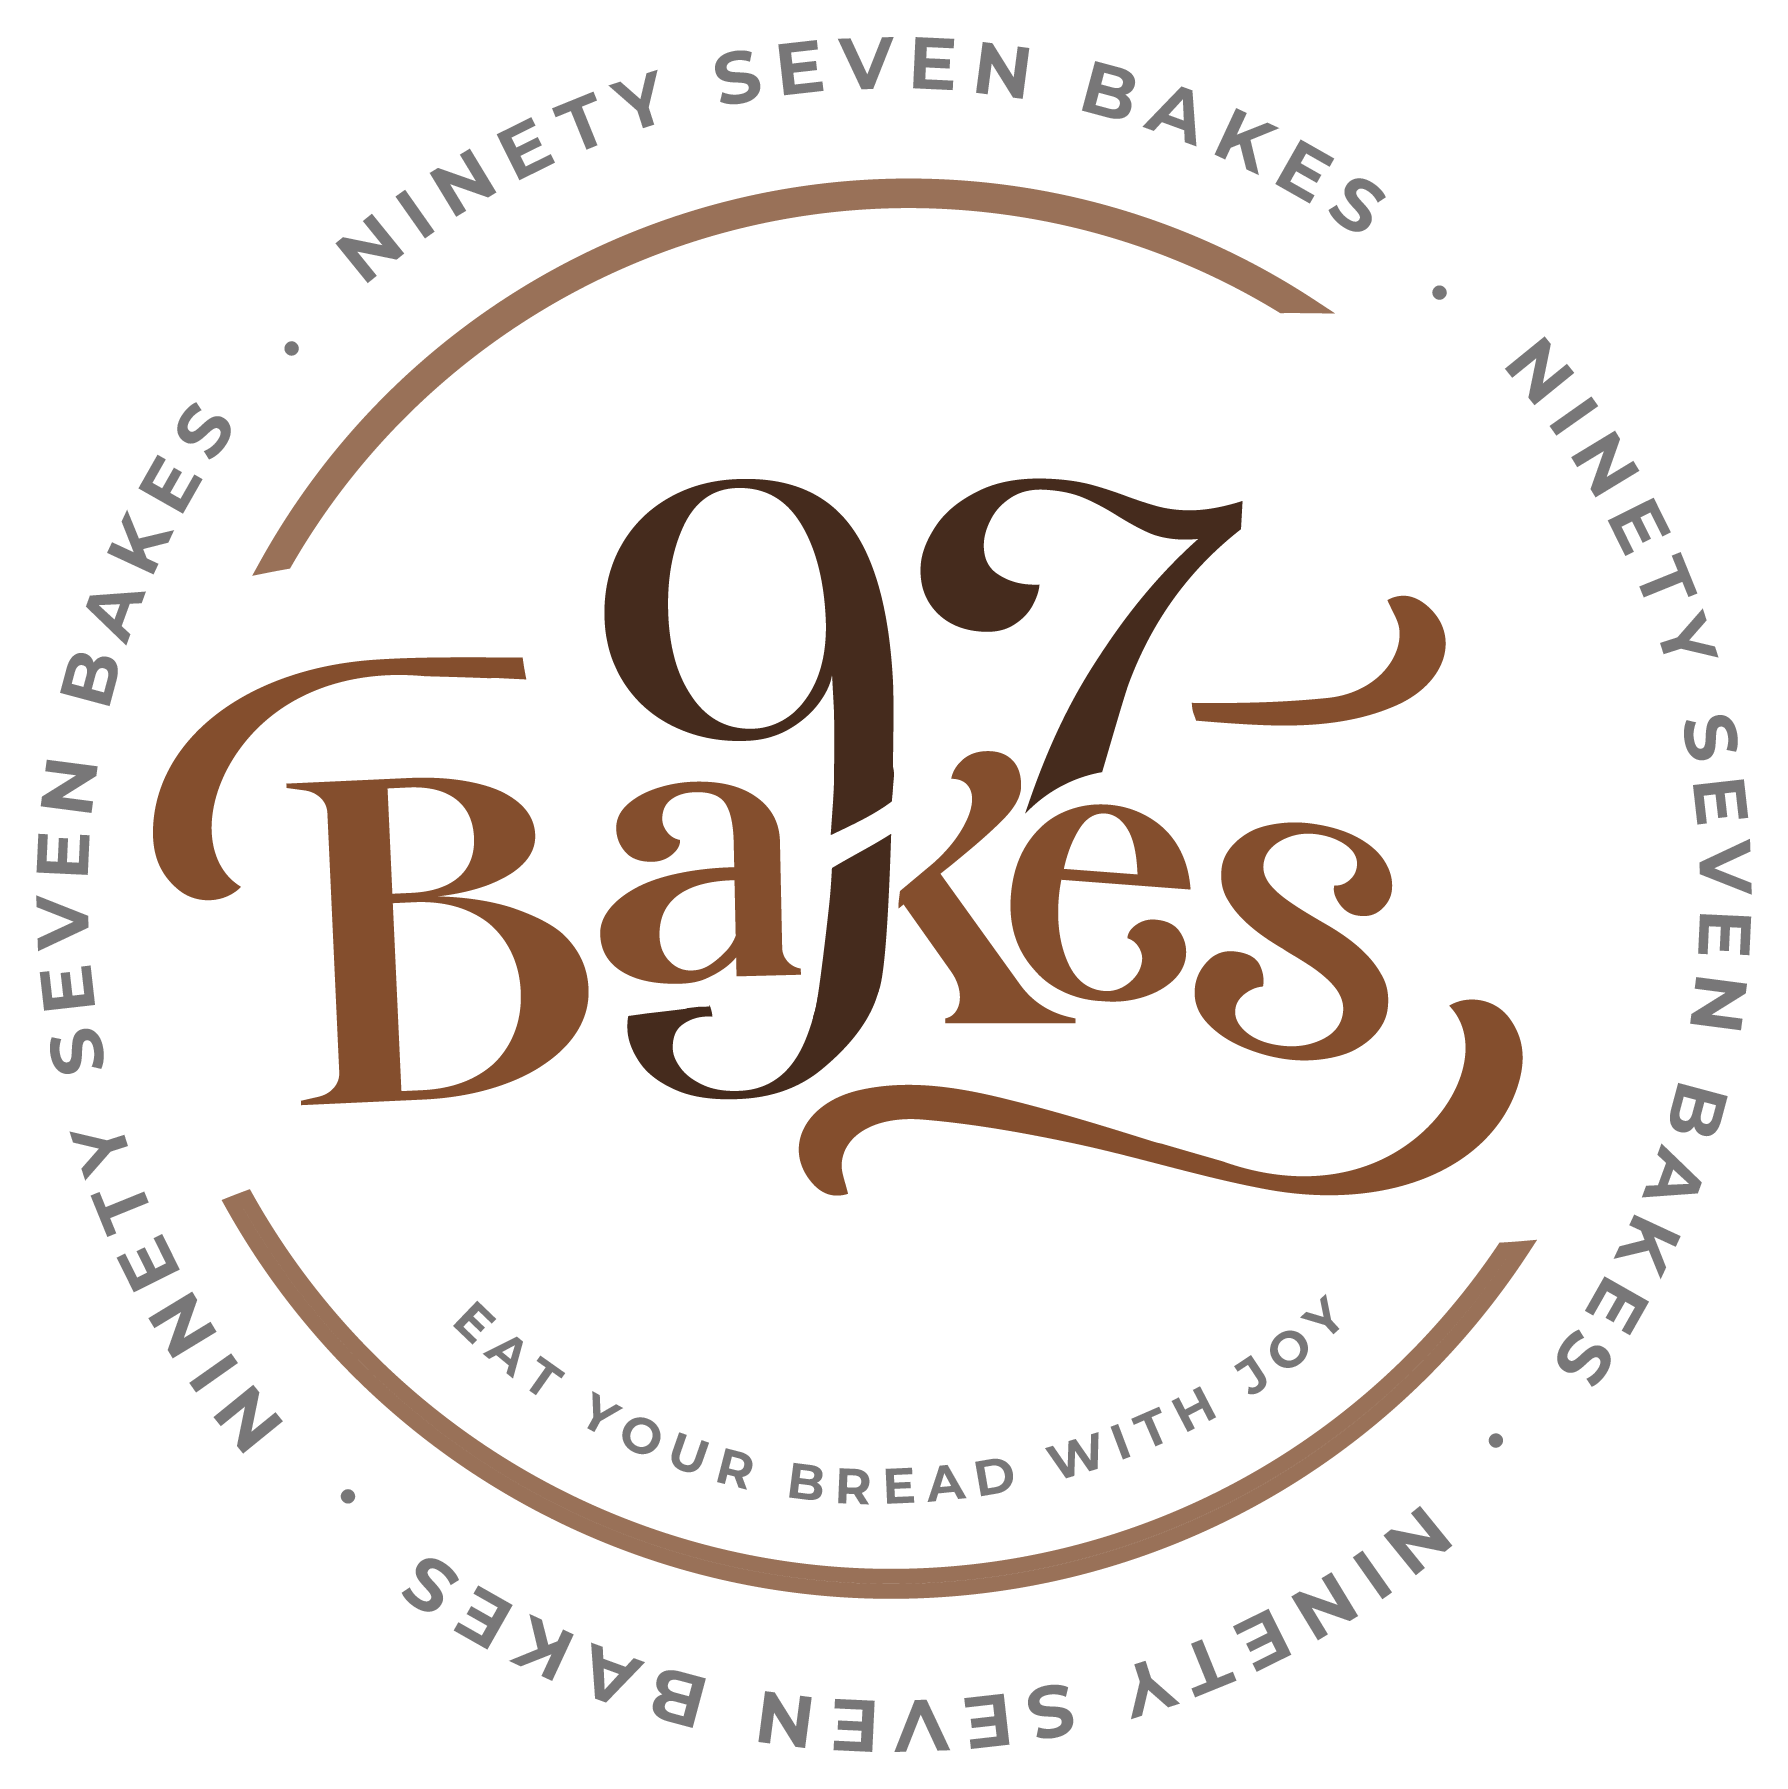 ThirdLaw branding and web design - 97 Bakes logo